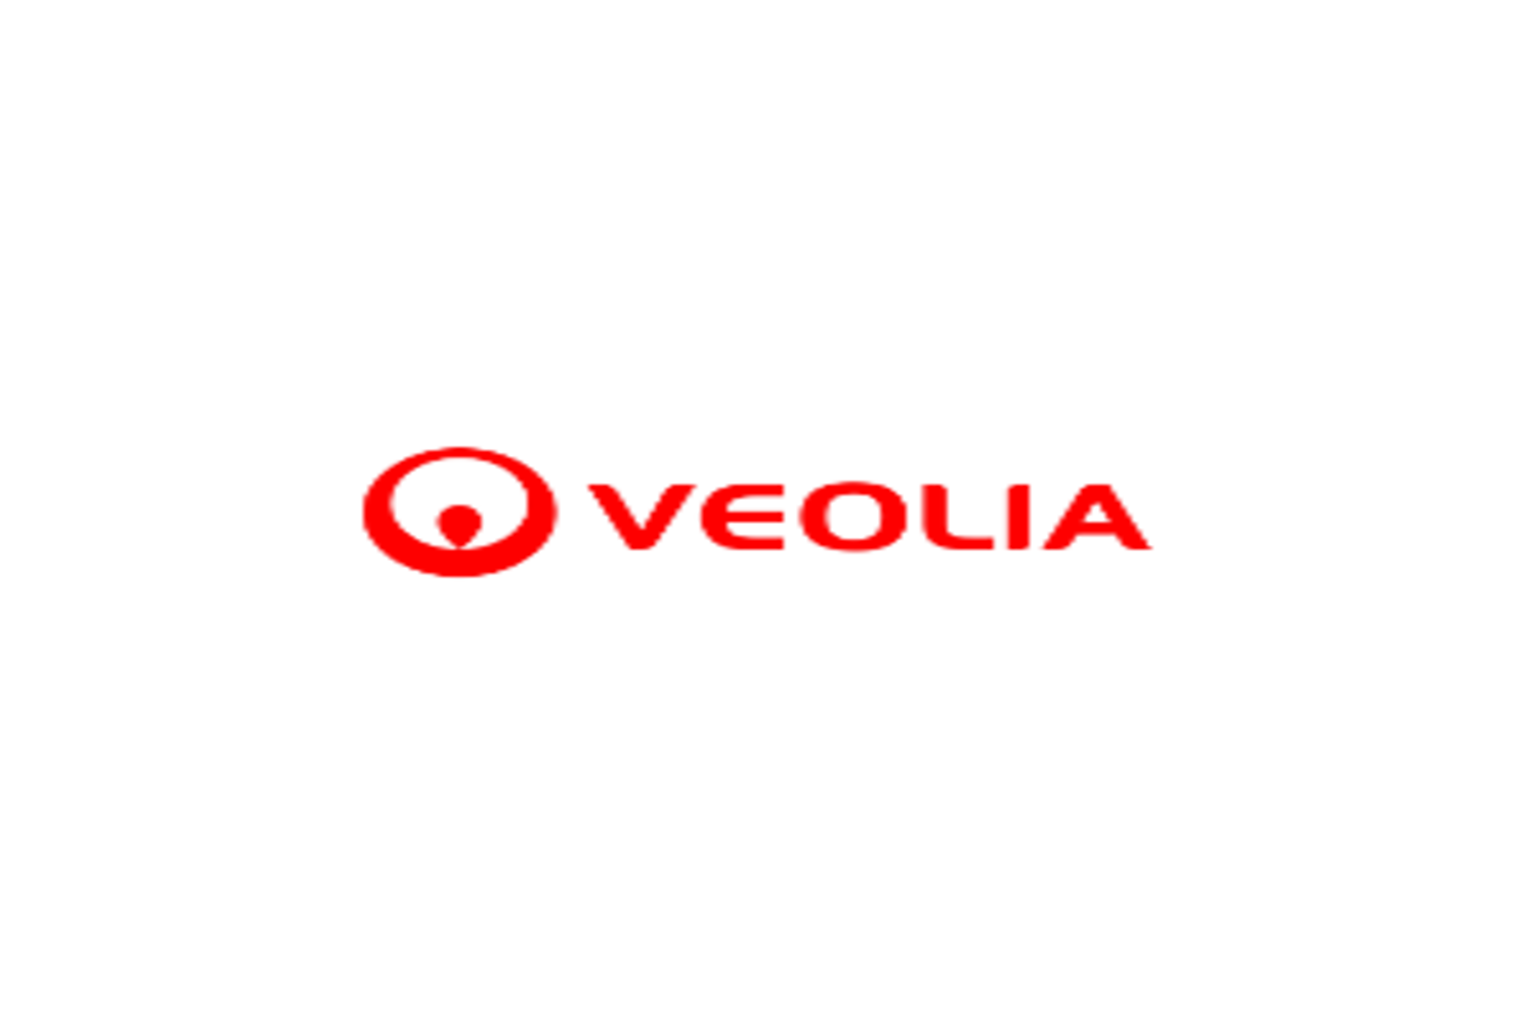 Veolia-logo